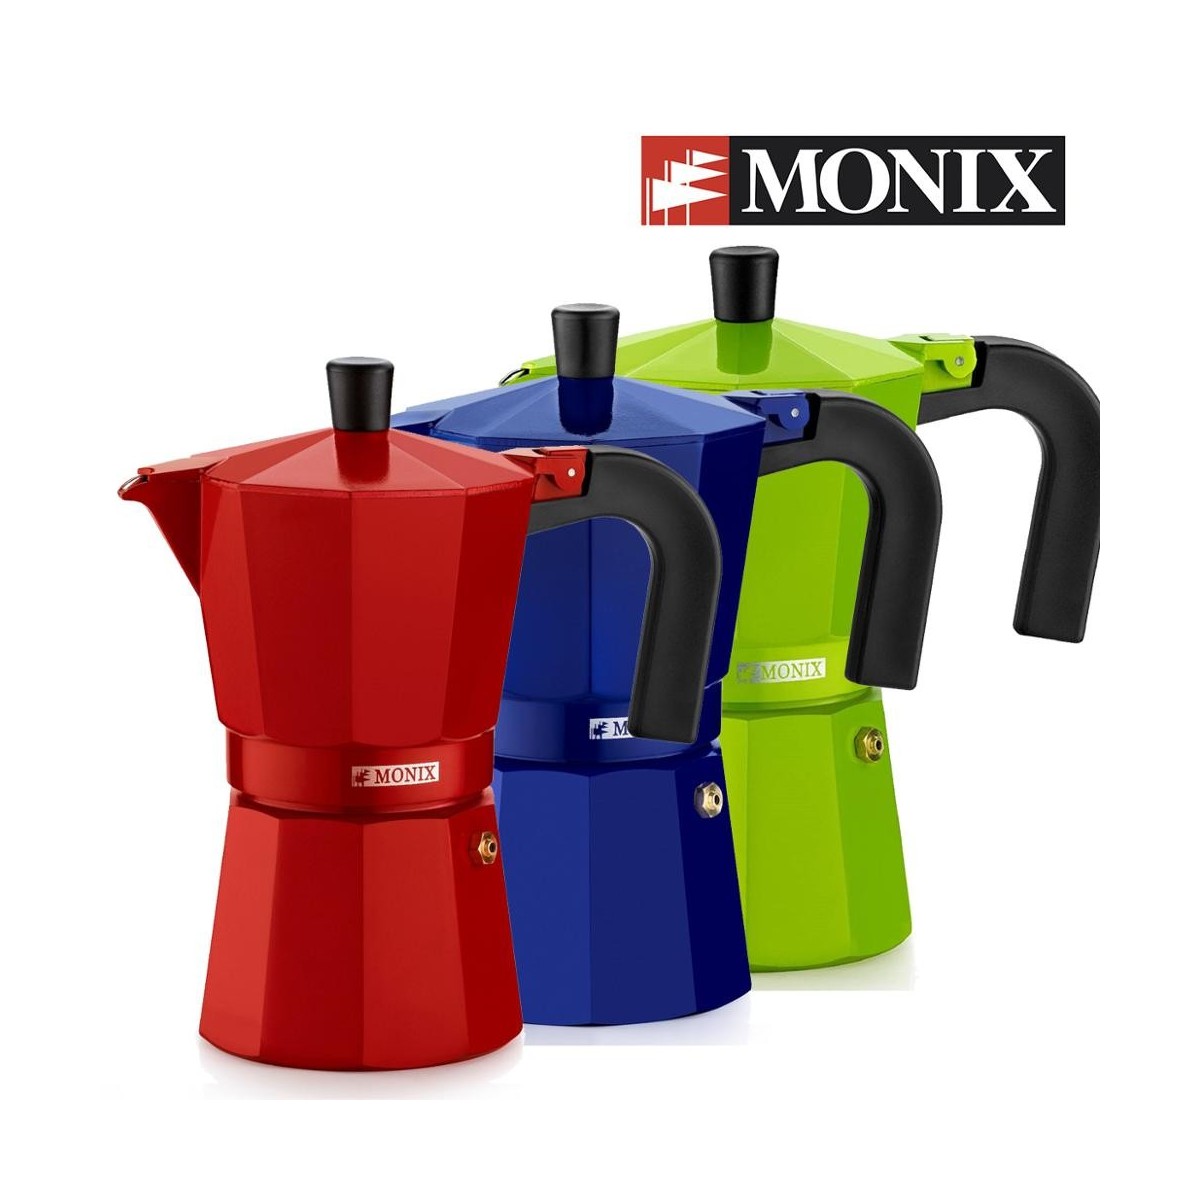 Monix - Cafeteras - Sartenes - Green Style